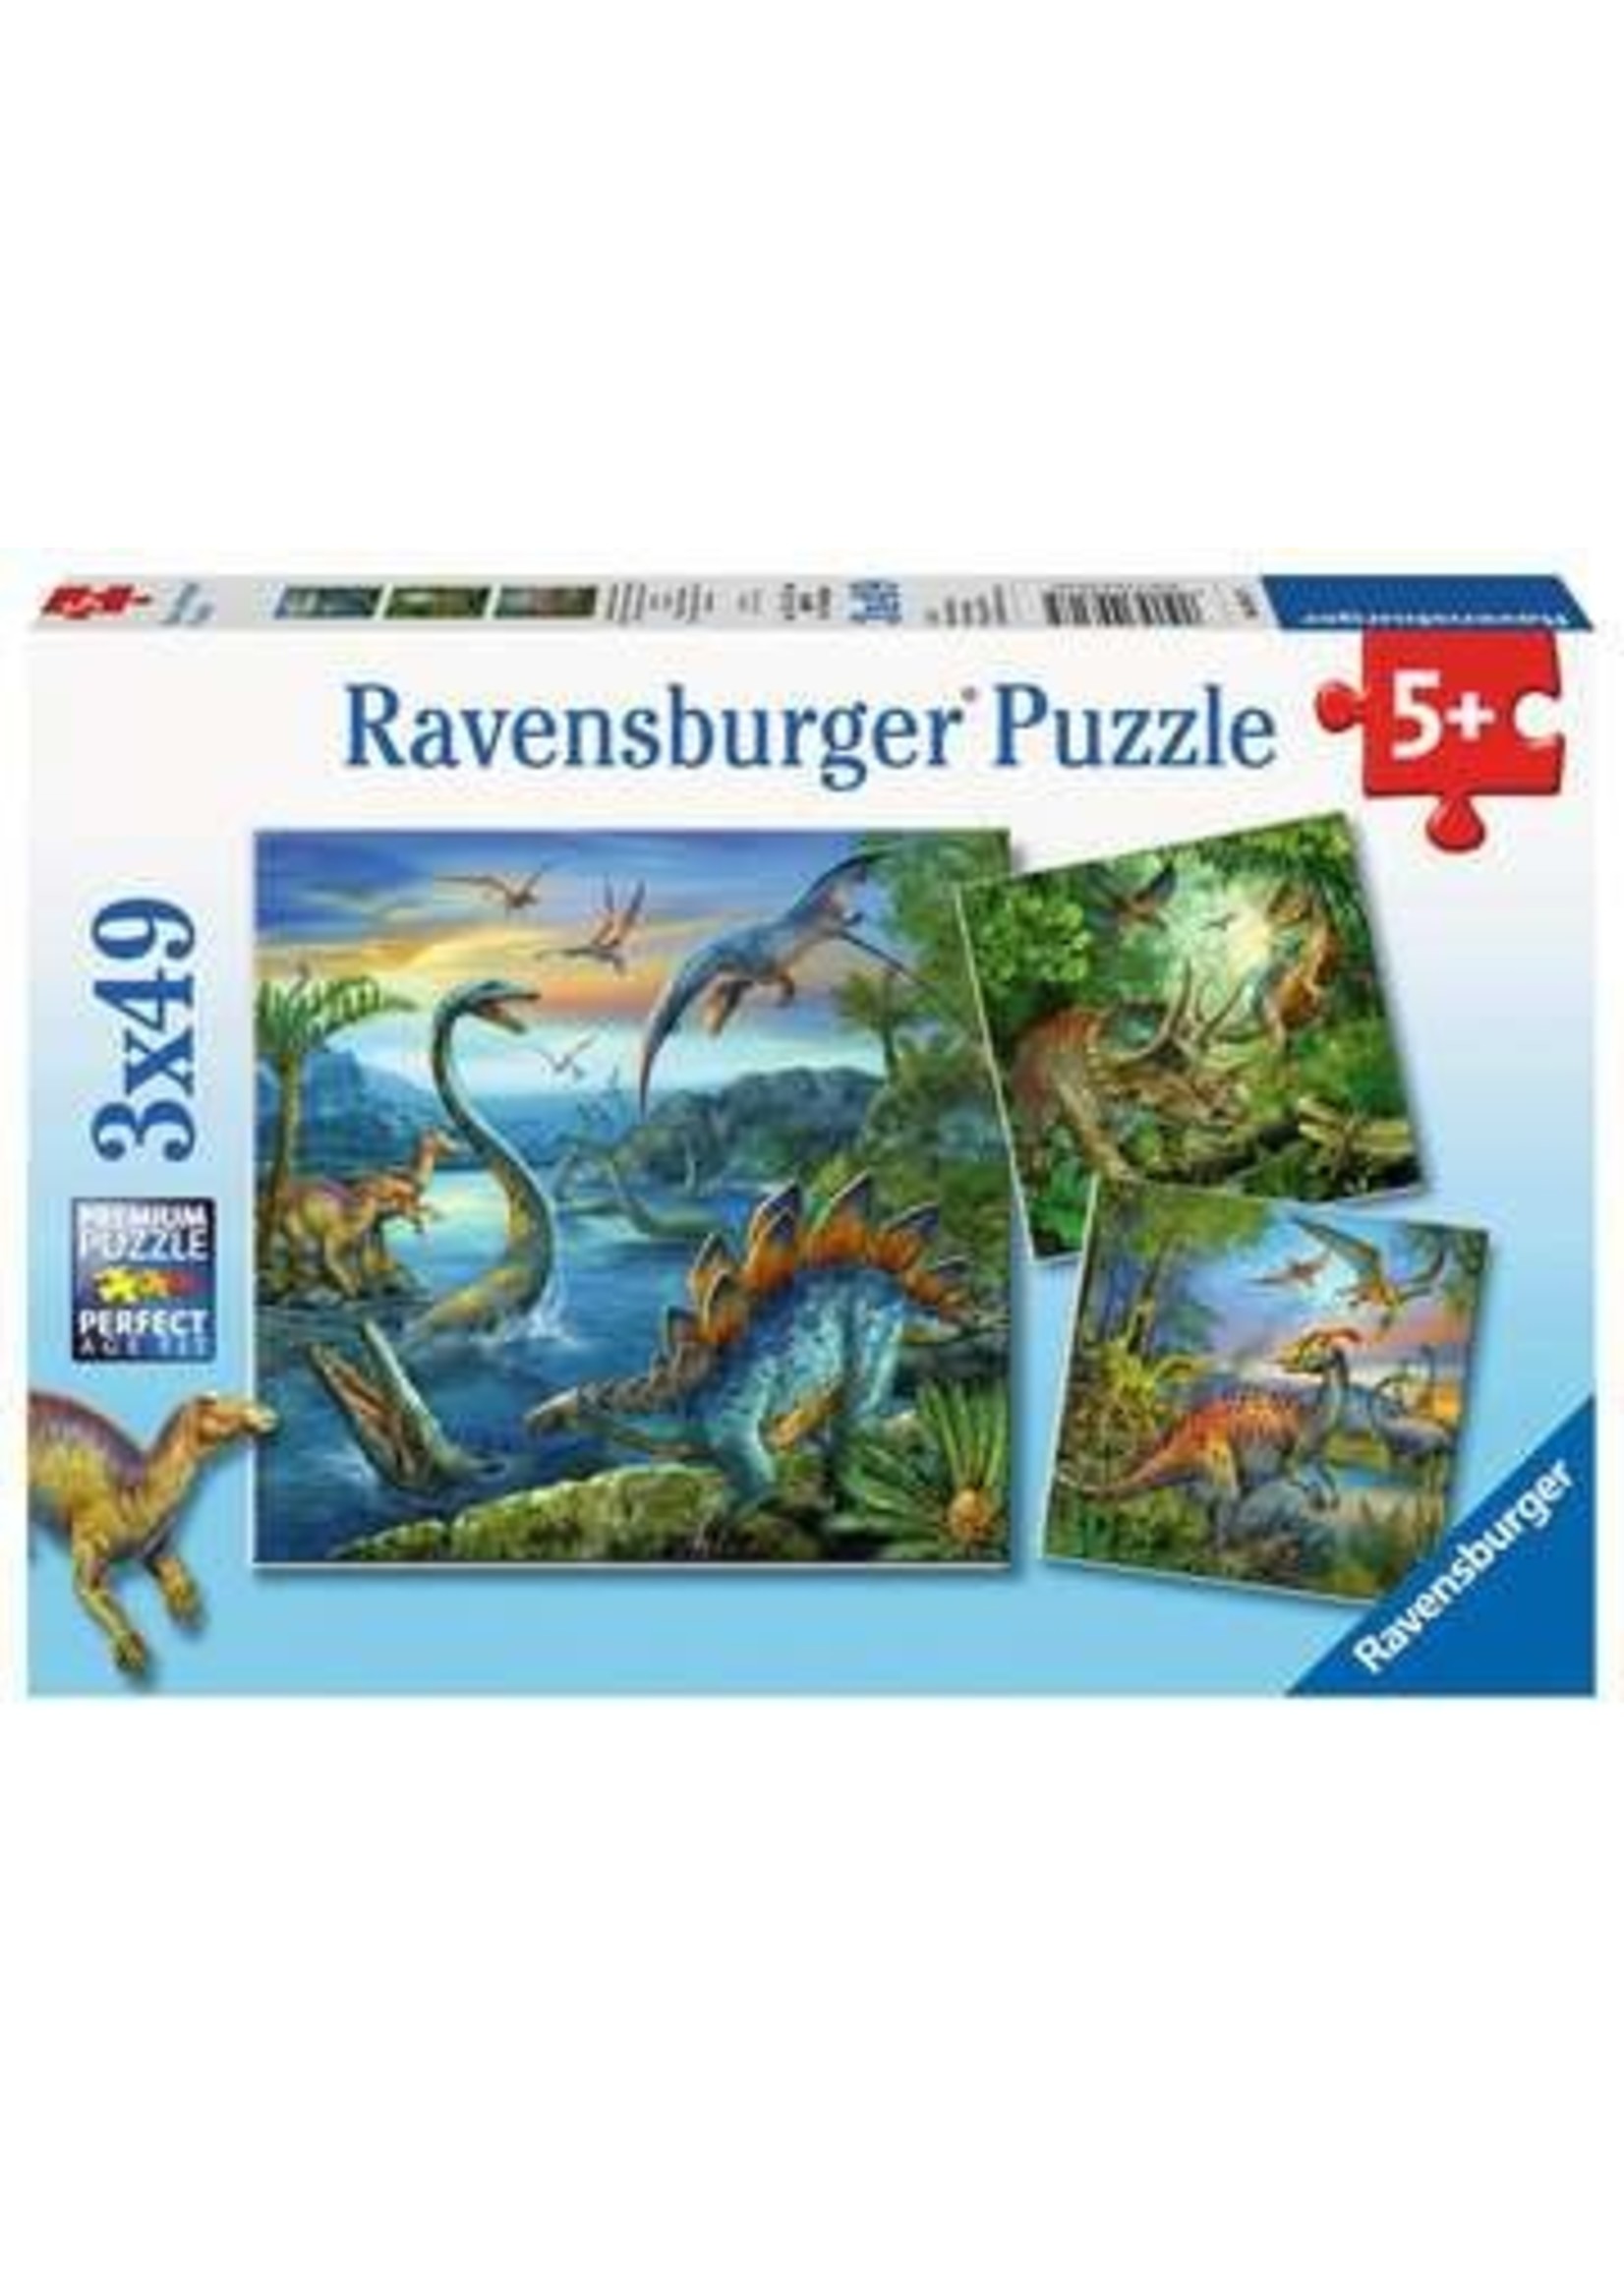 Ravensburger "Dinosaur Fascination" 3x 49 Piece Puzzles